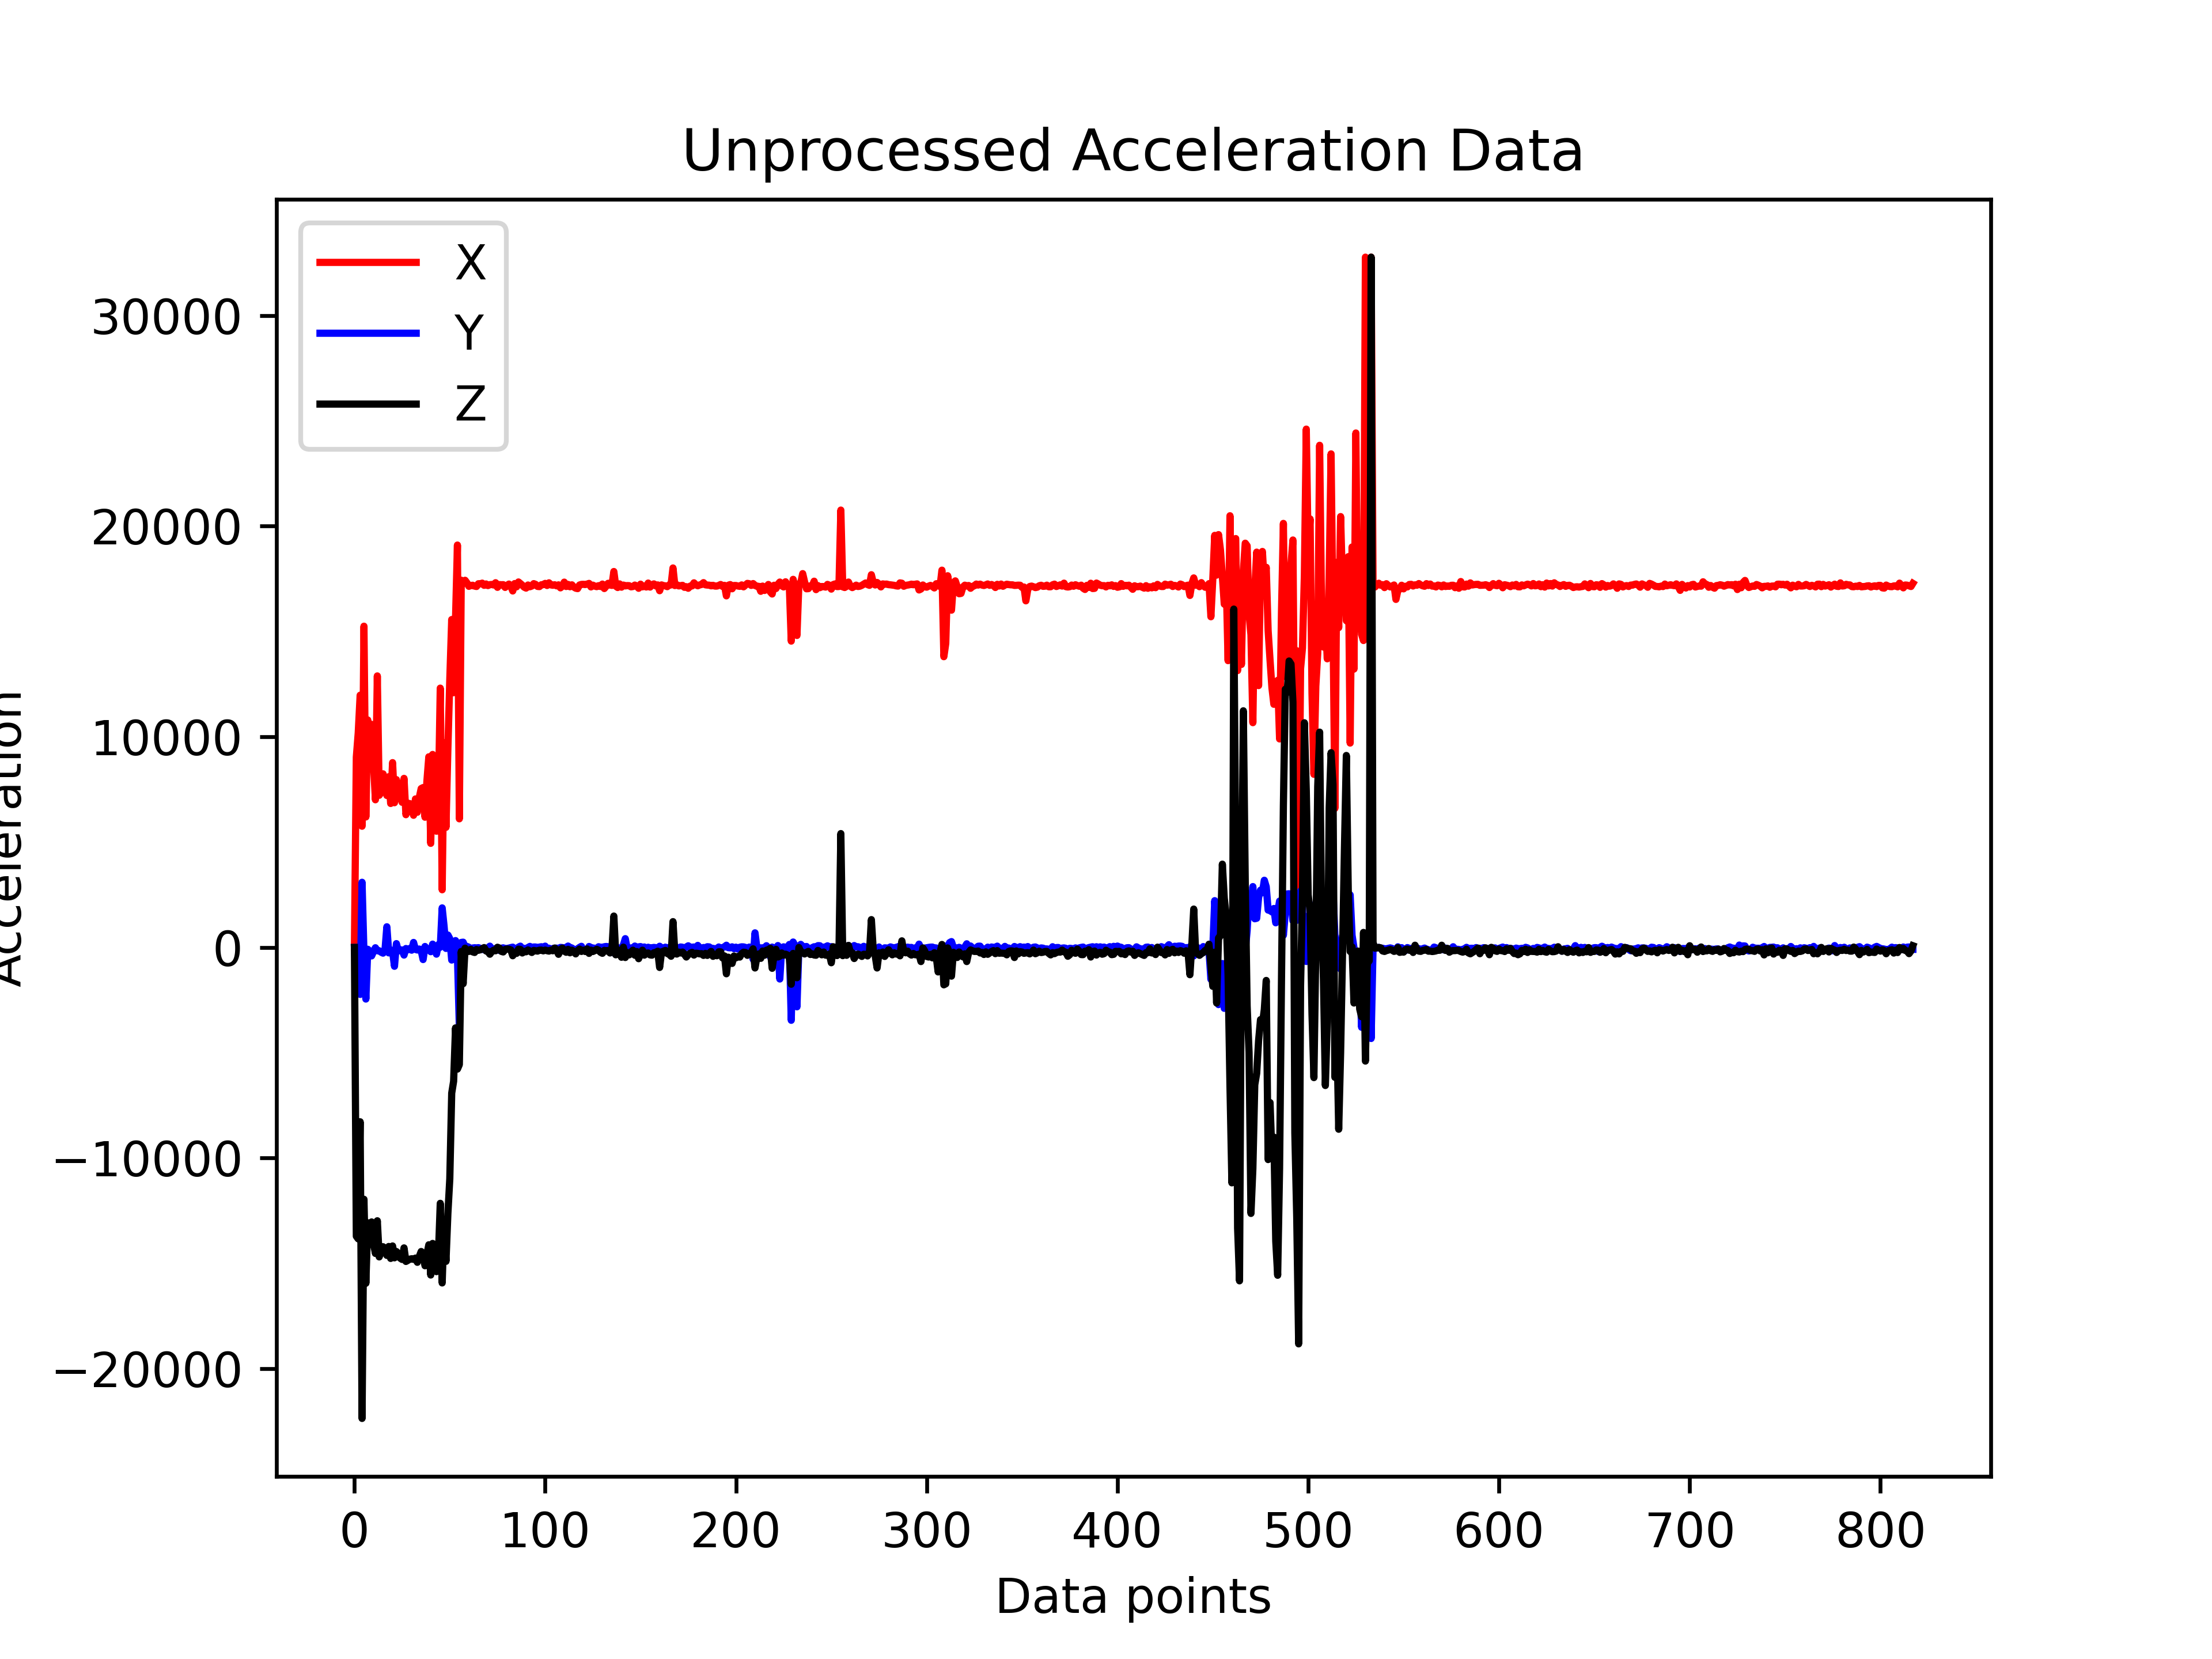 Figure 2 - Raw acceleration data